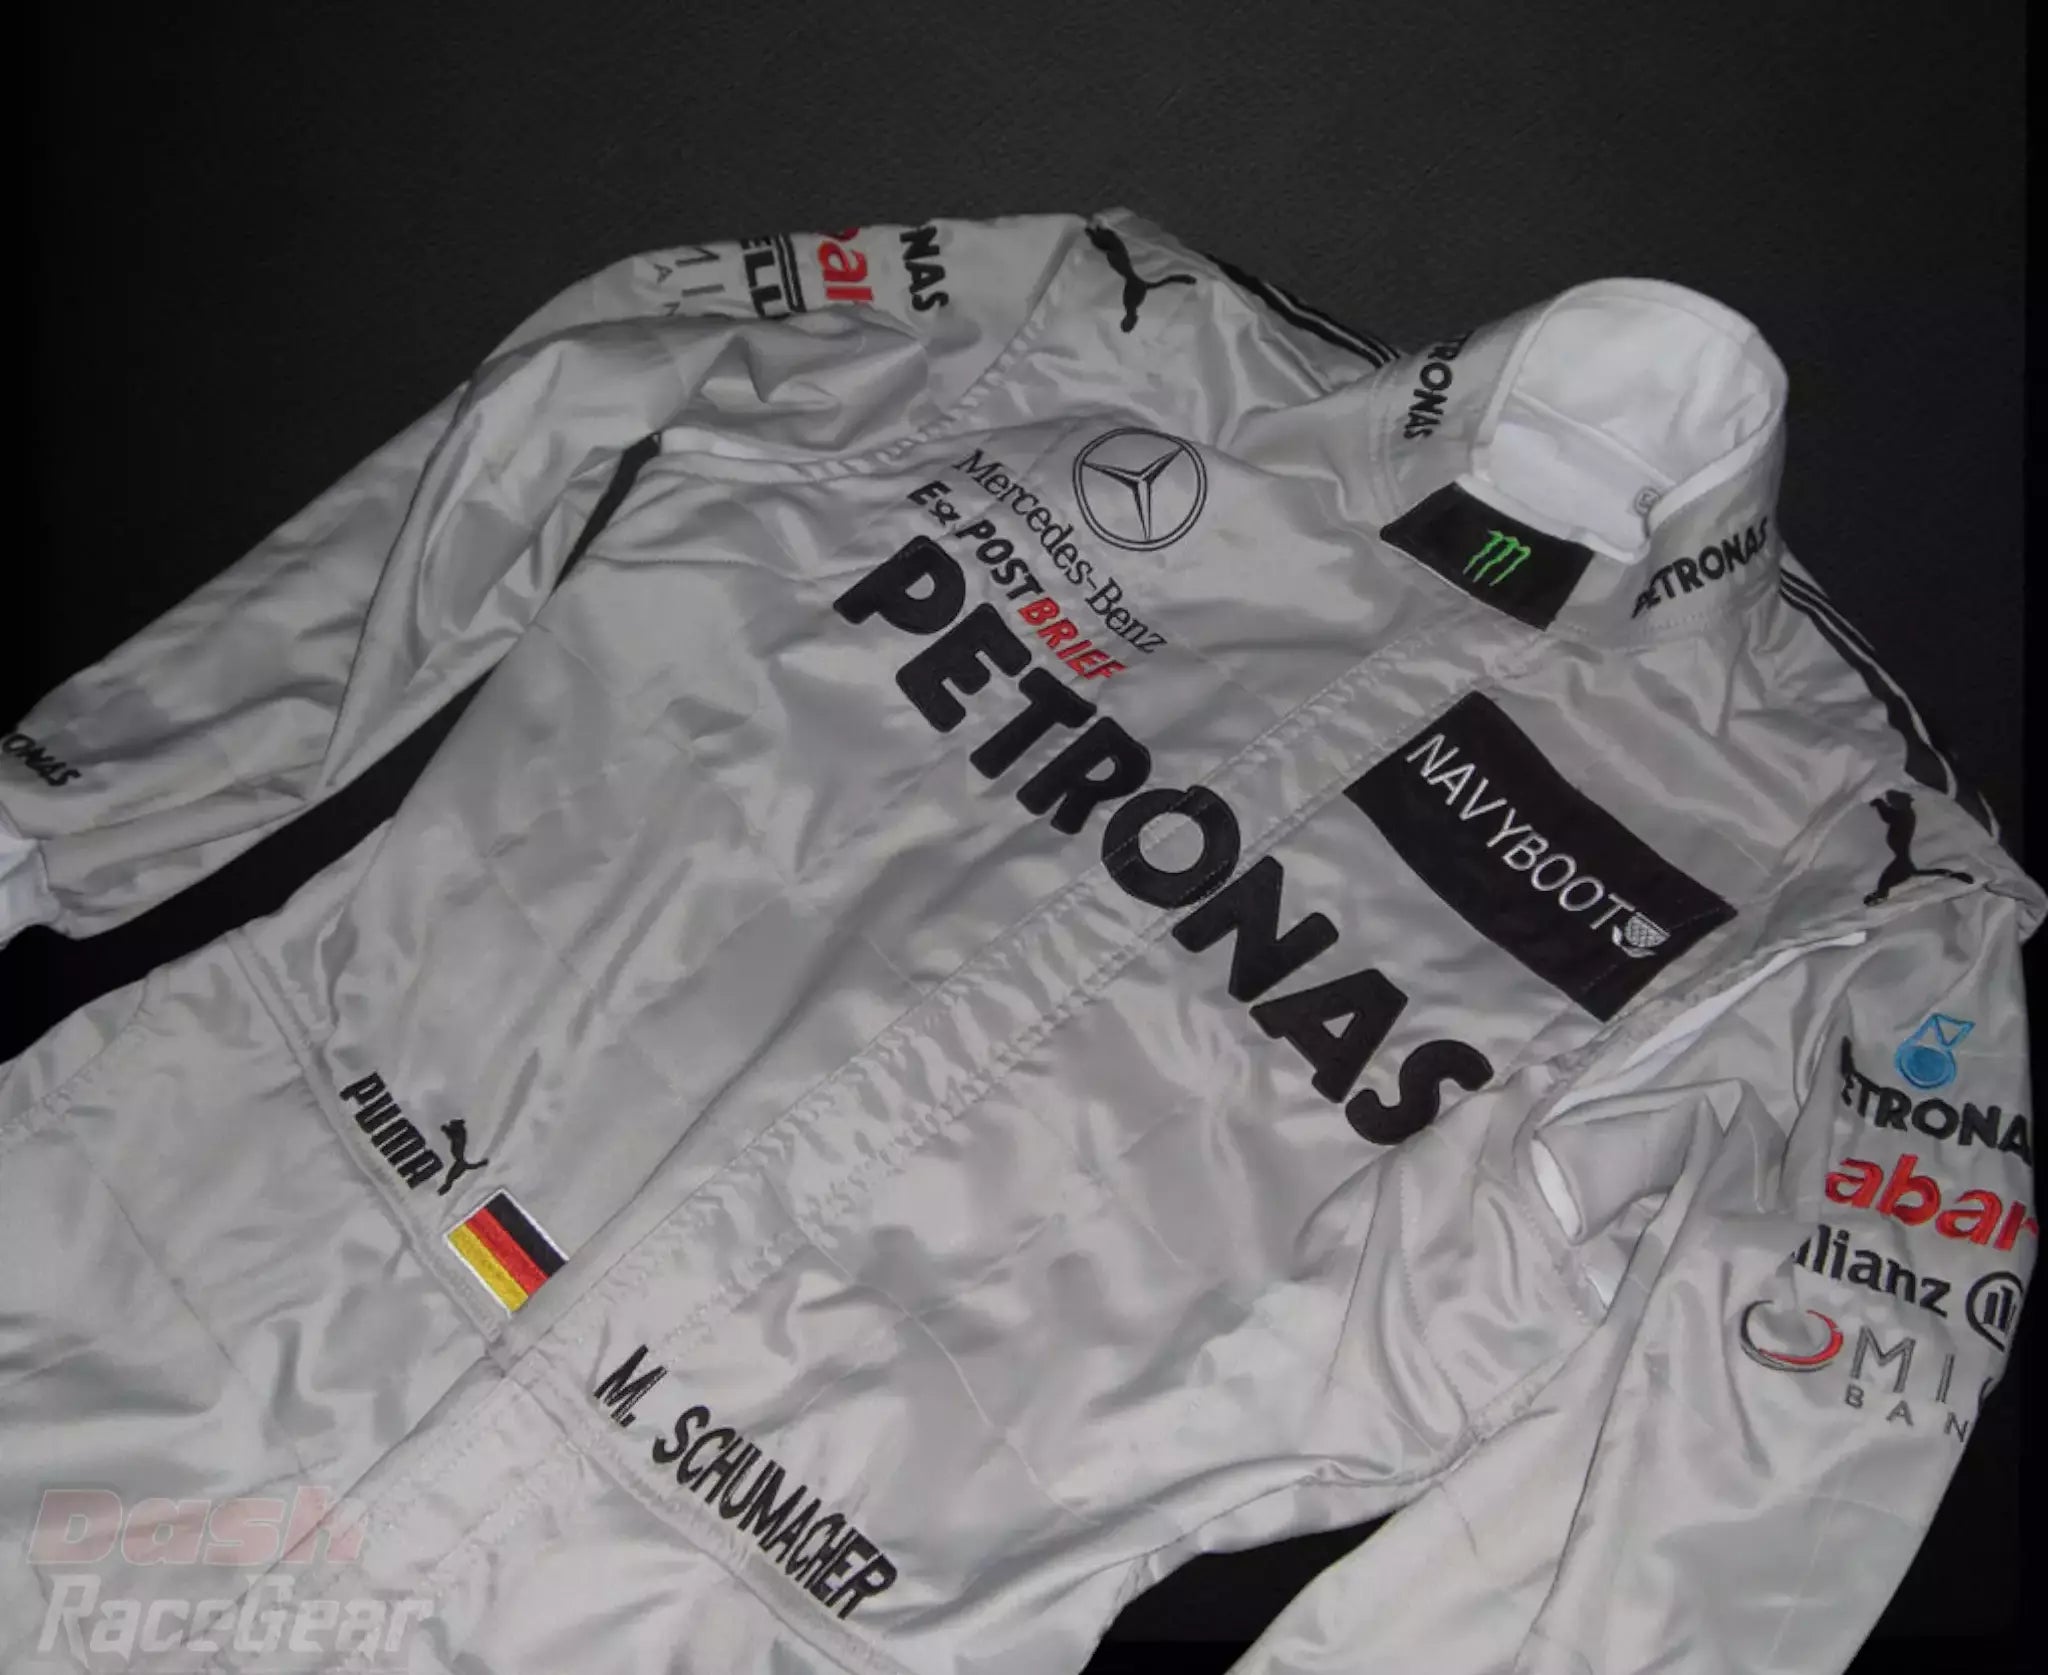 2012 Michael Schumacher Mercedes Benz F1 Embroidered Race Suit